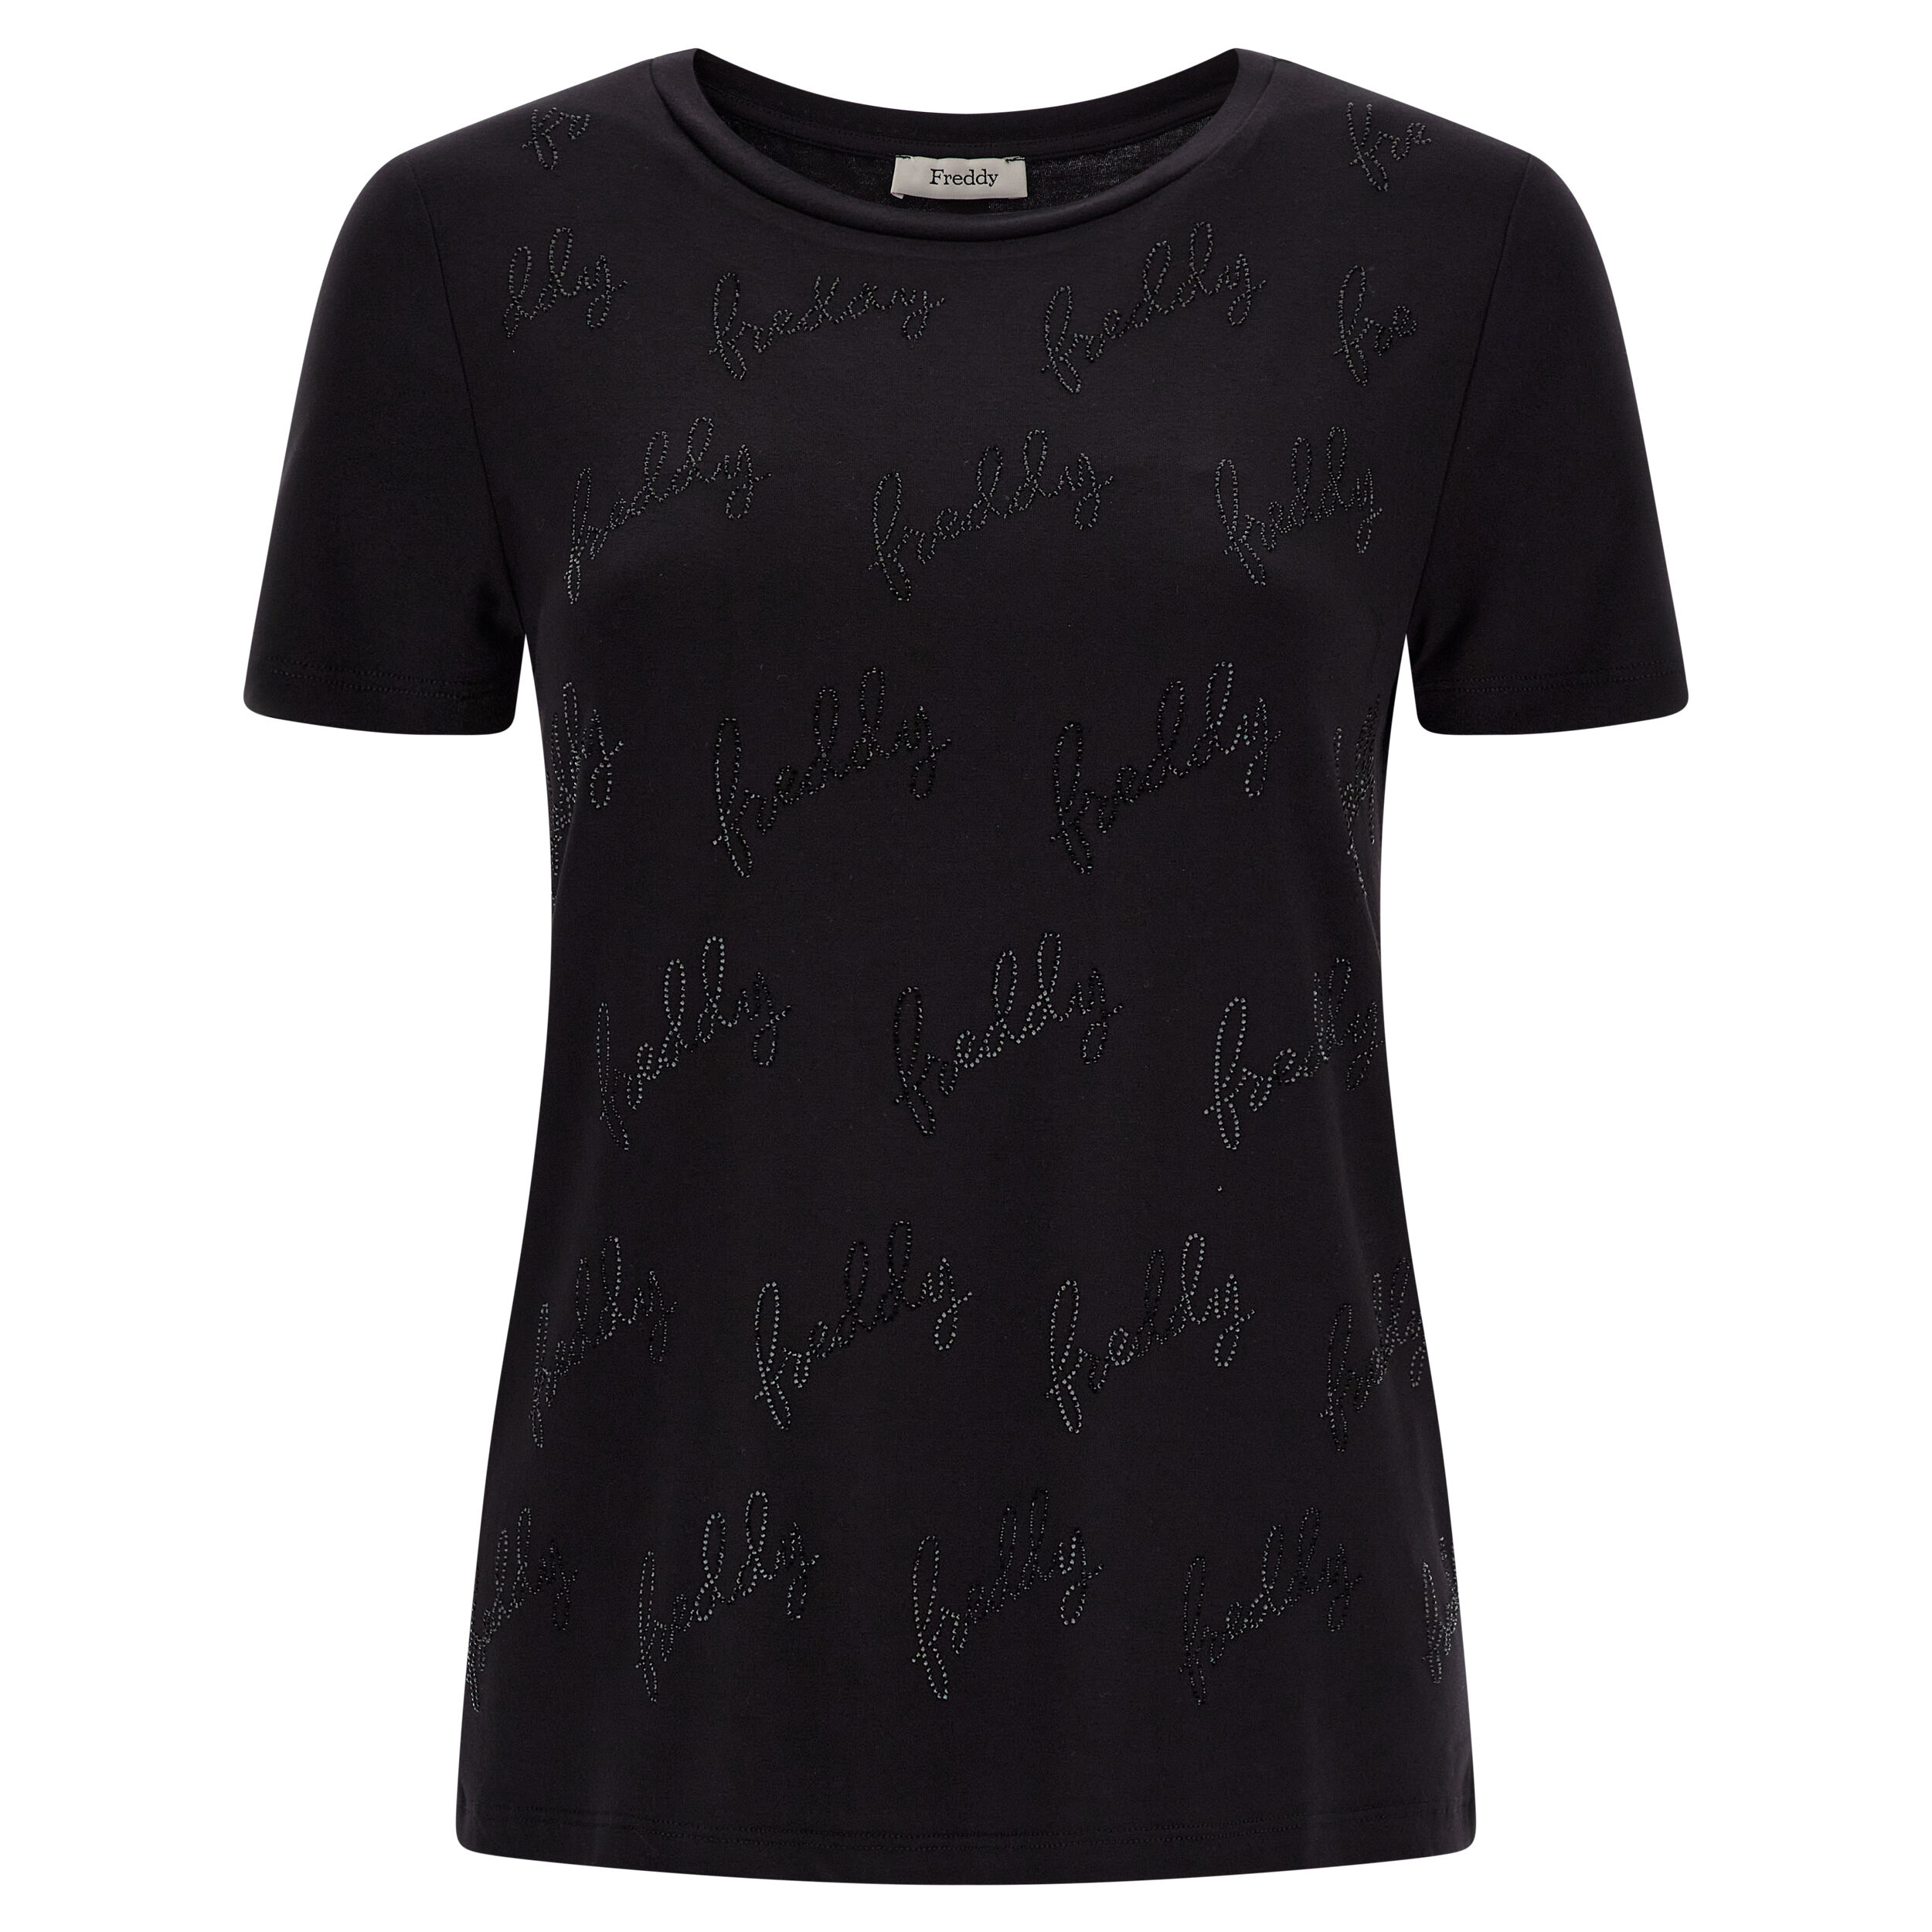 Freddy T-shirt con logo all-over in strass sul fronte Black- Gray Black Donna Extra Small